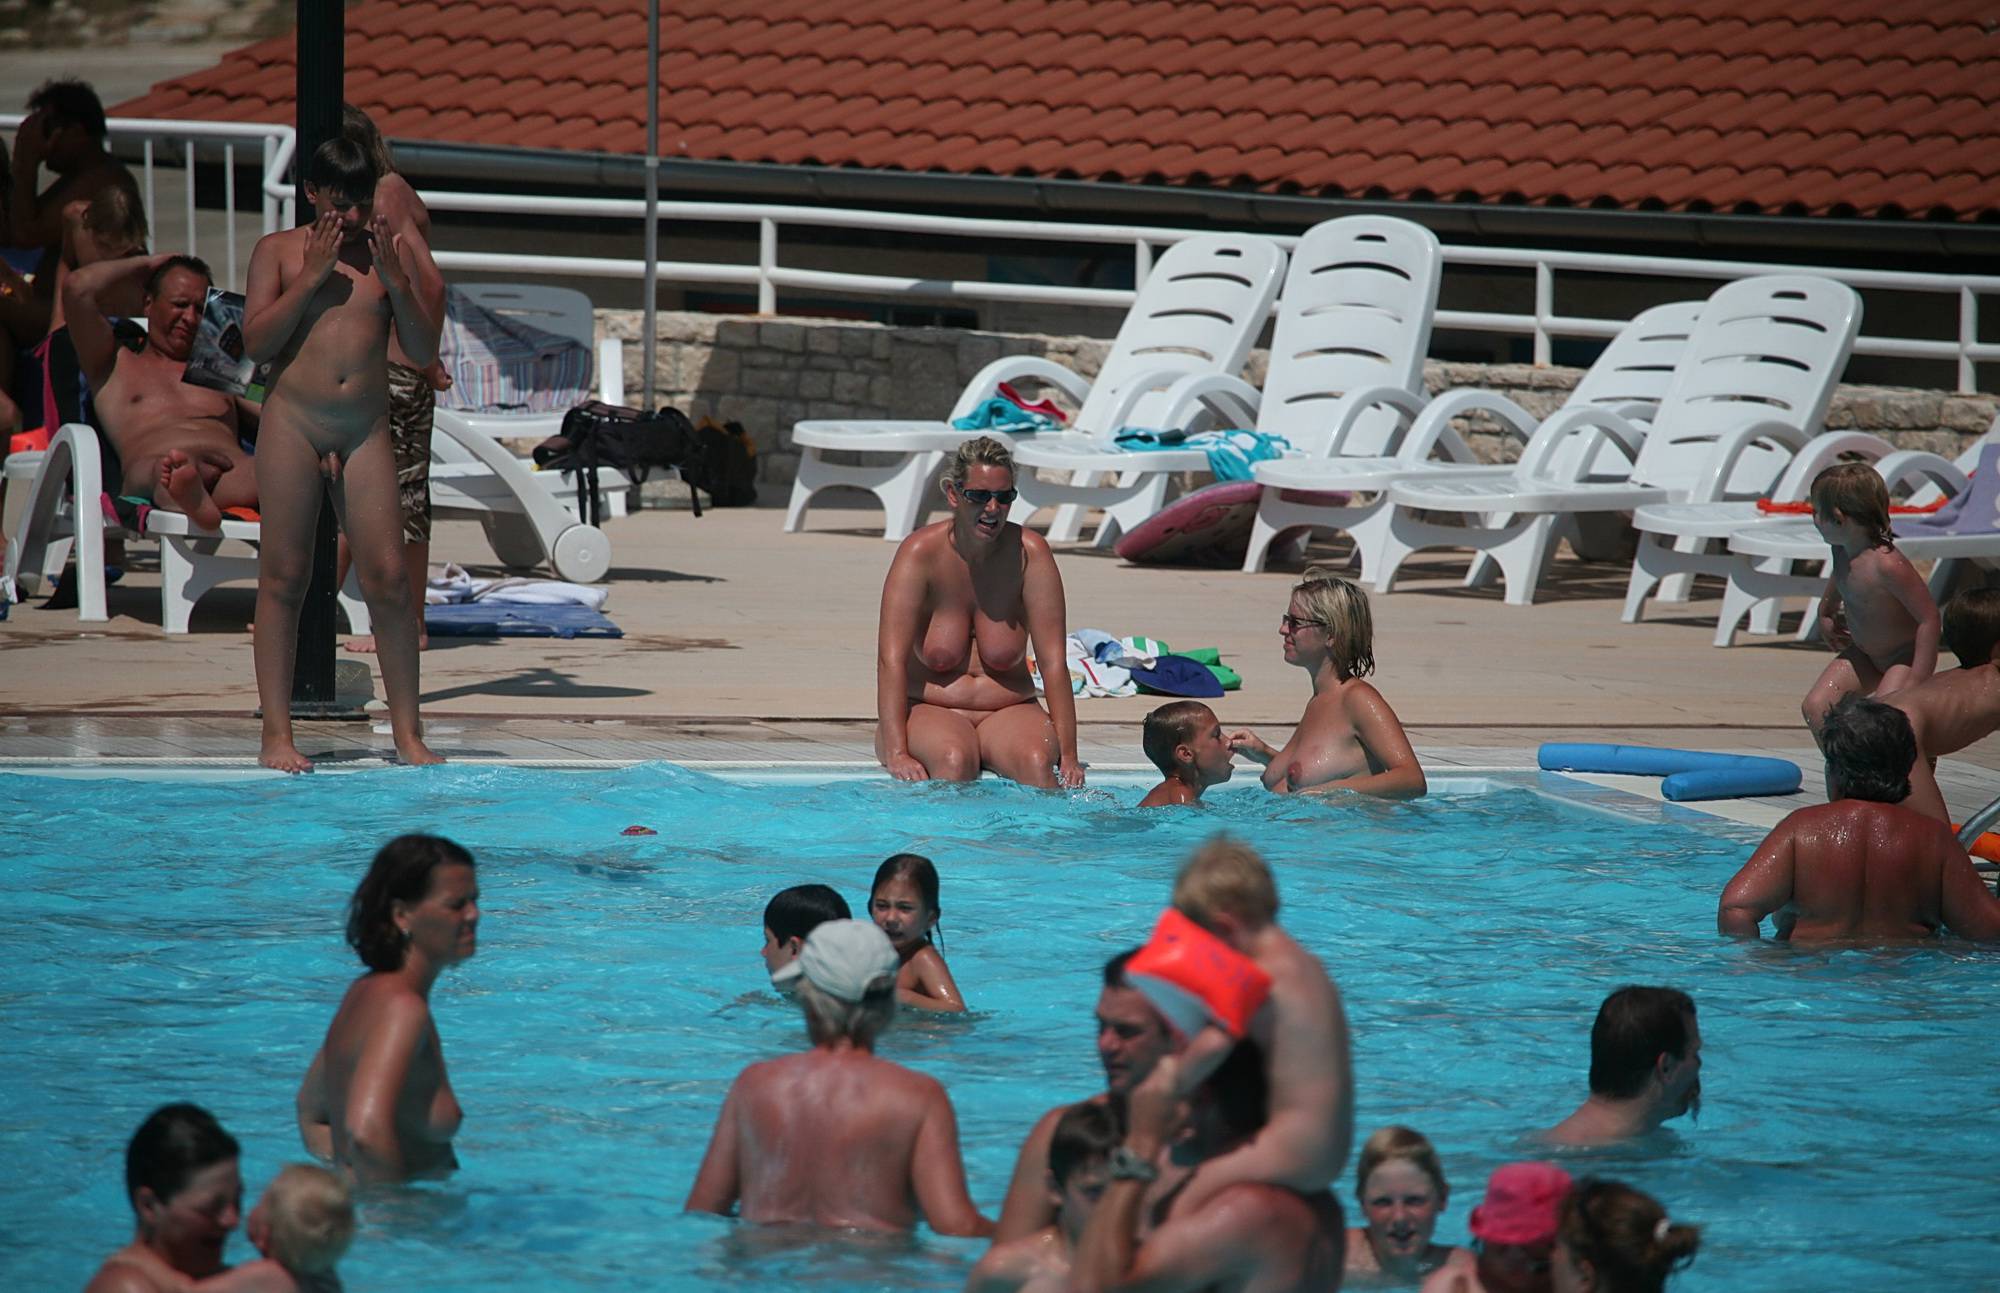 Pure Nudism Photos-Large Pool Gatherings - 3